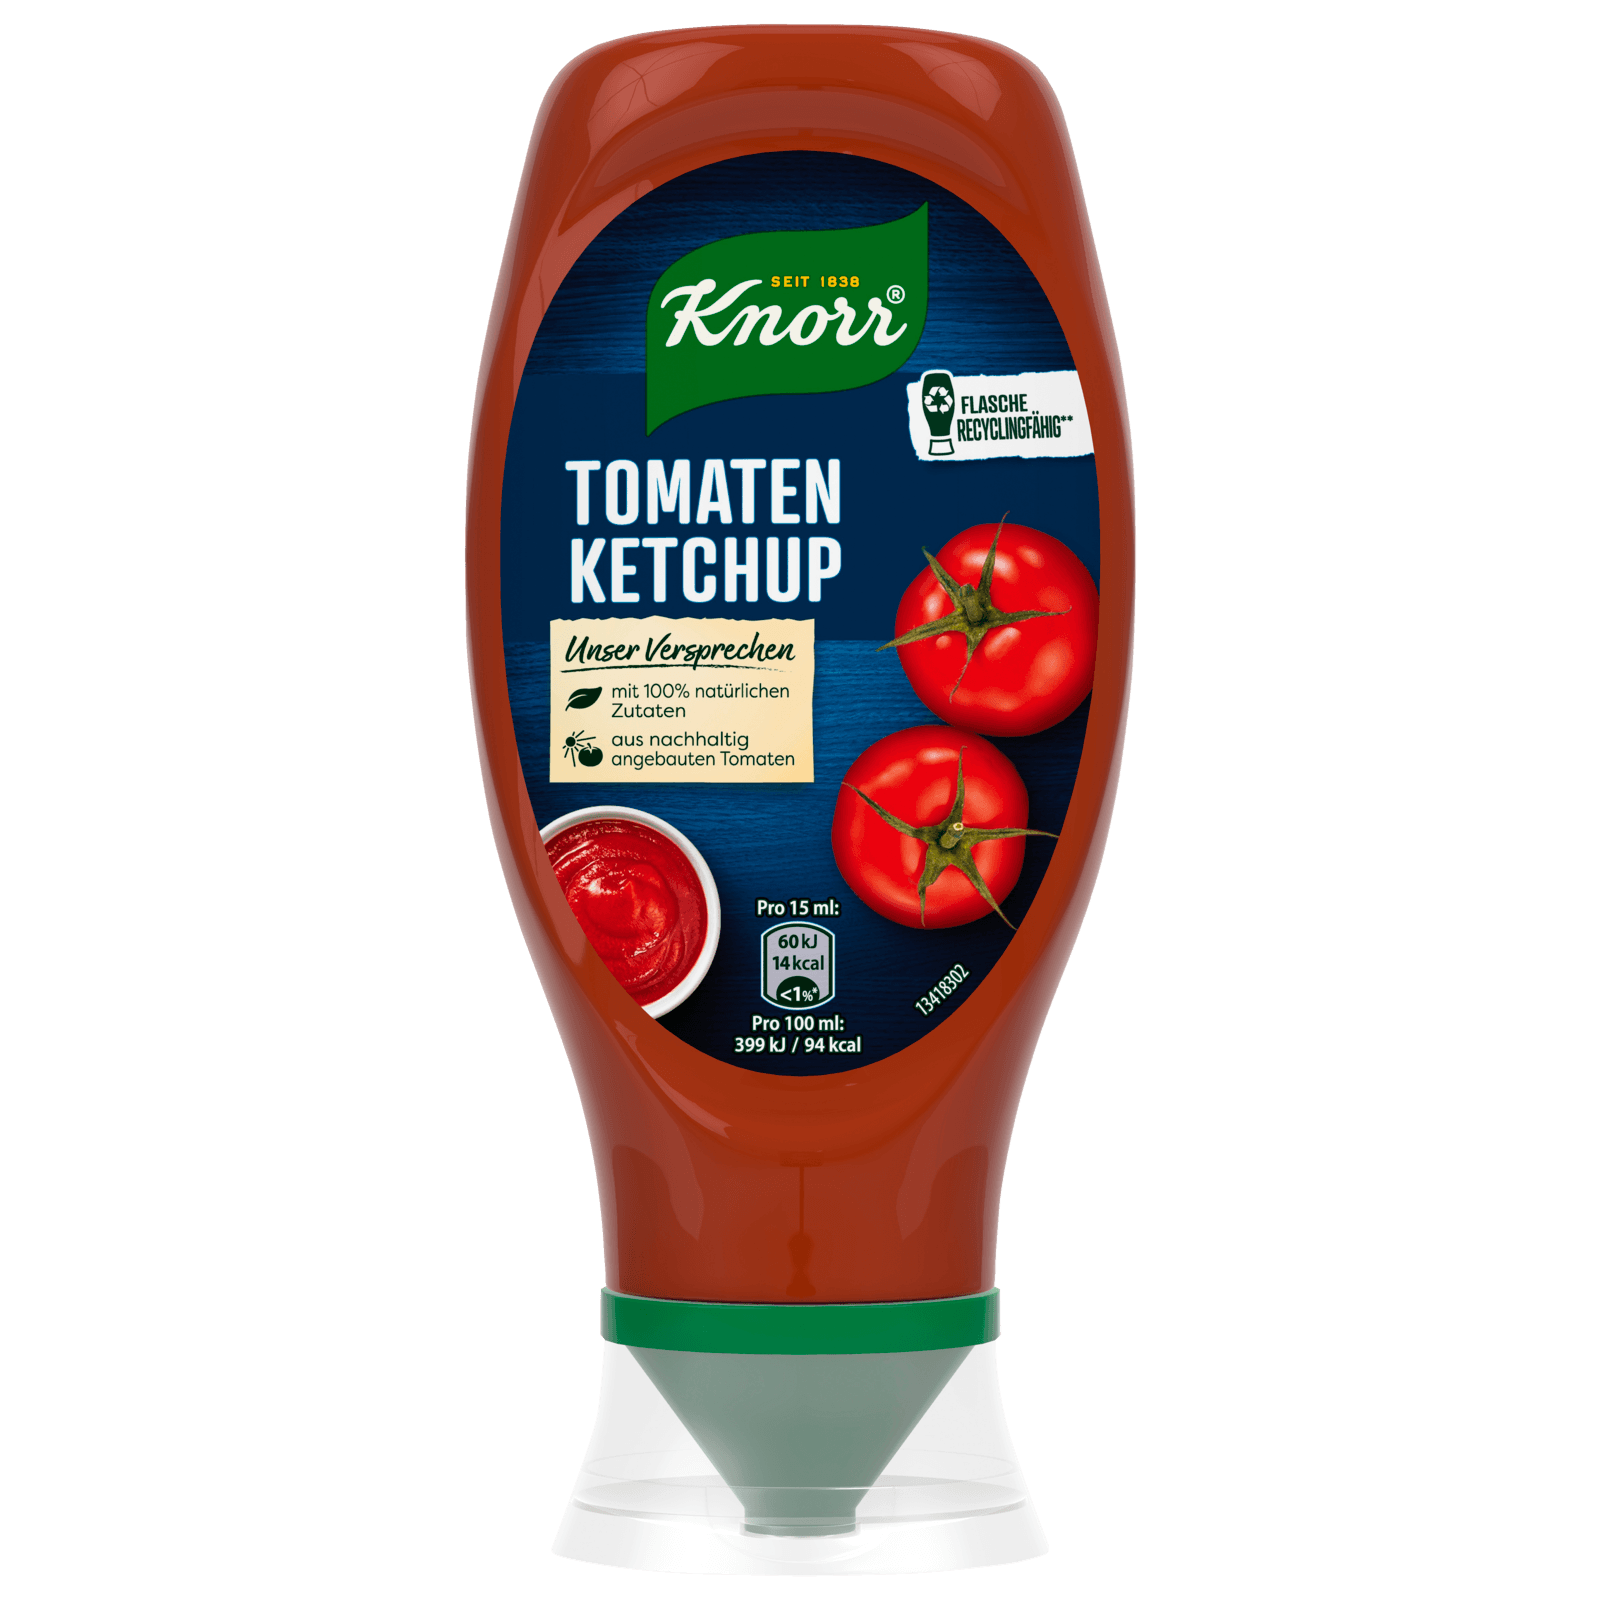 Knorr Tomaten Ketchup 430 ml bei REWE online bestellen!